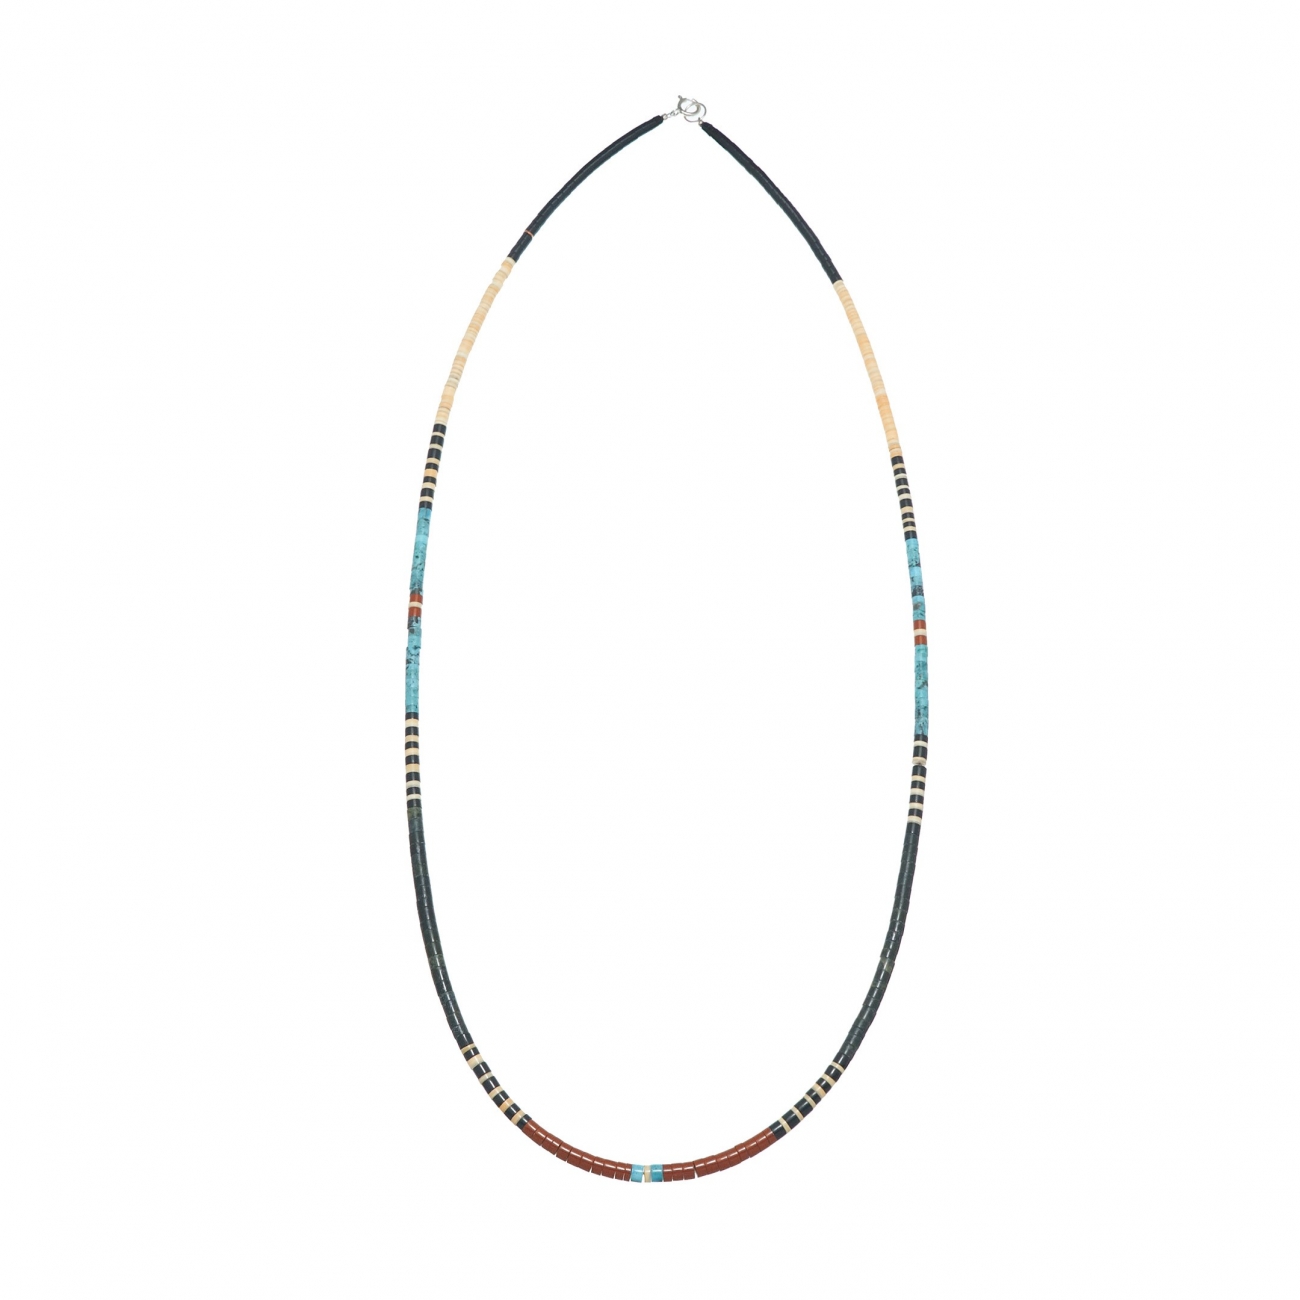 Harpo Paris Pueblo necklace CO21 heishi beads